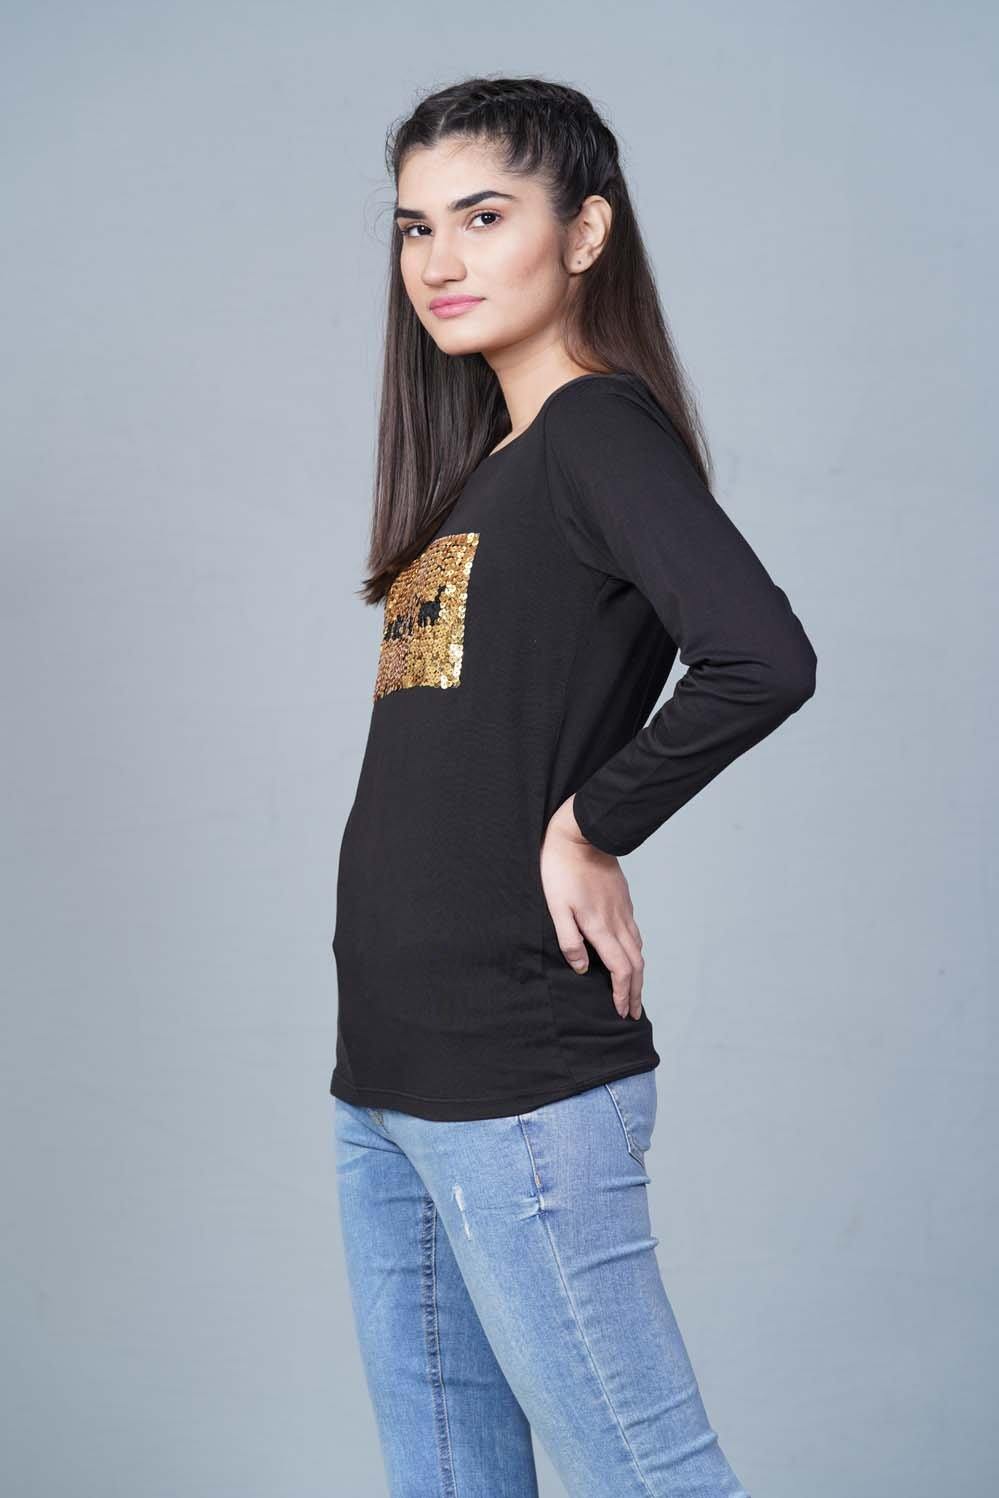 Hope Not Out by Shahid Afridi Women T-SHIRT Black T-Shirt HWKTF20026